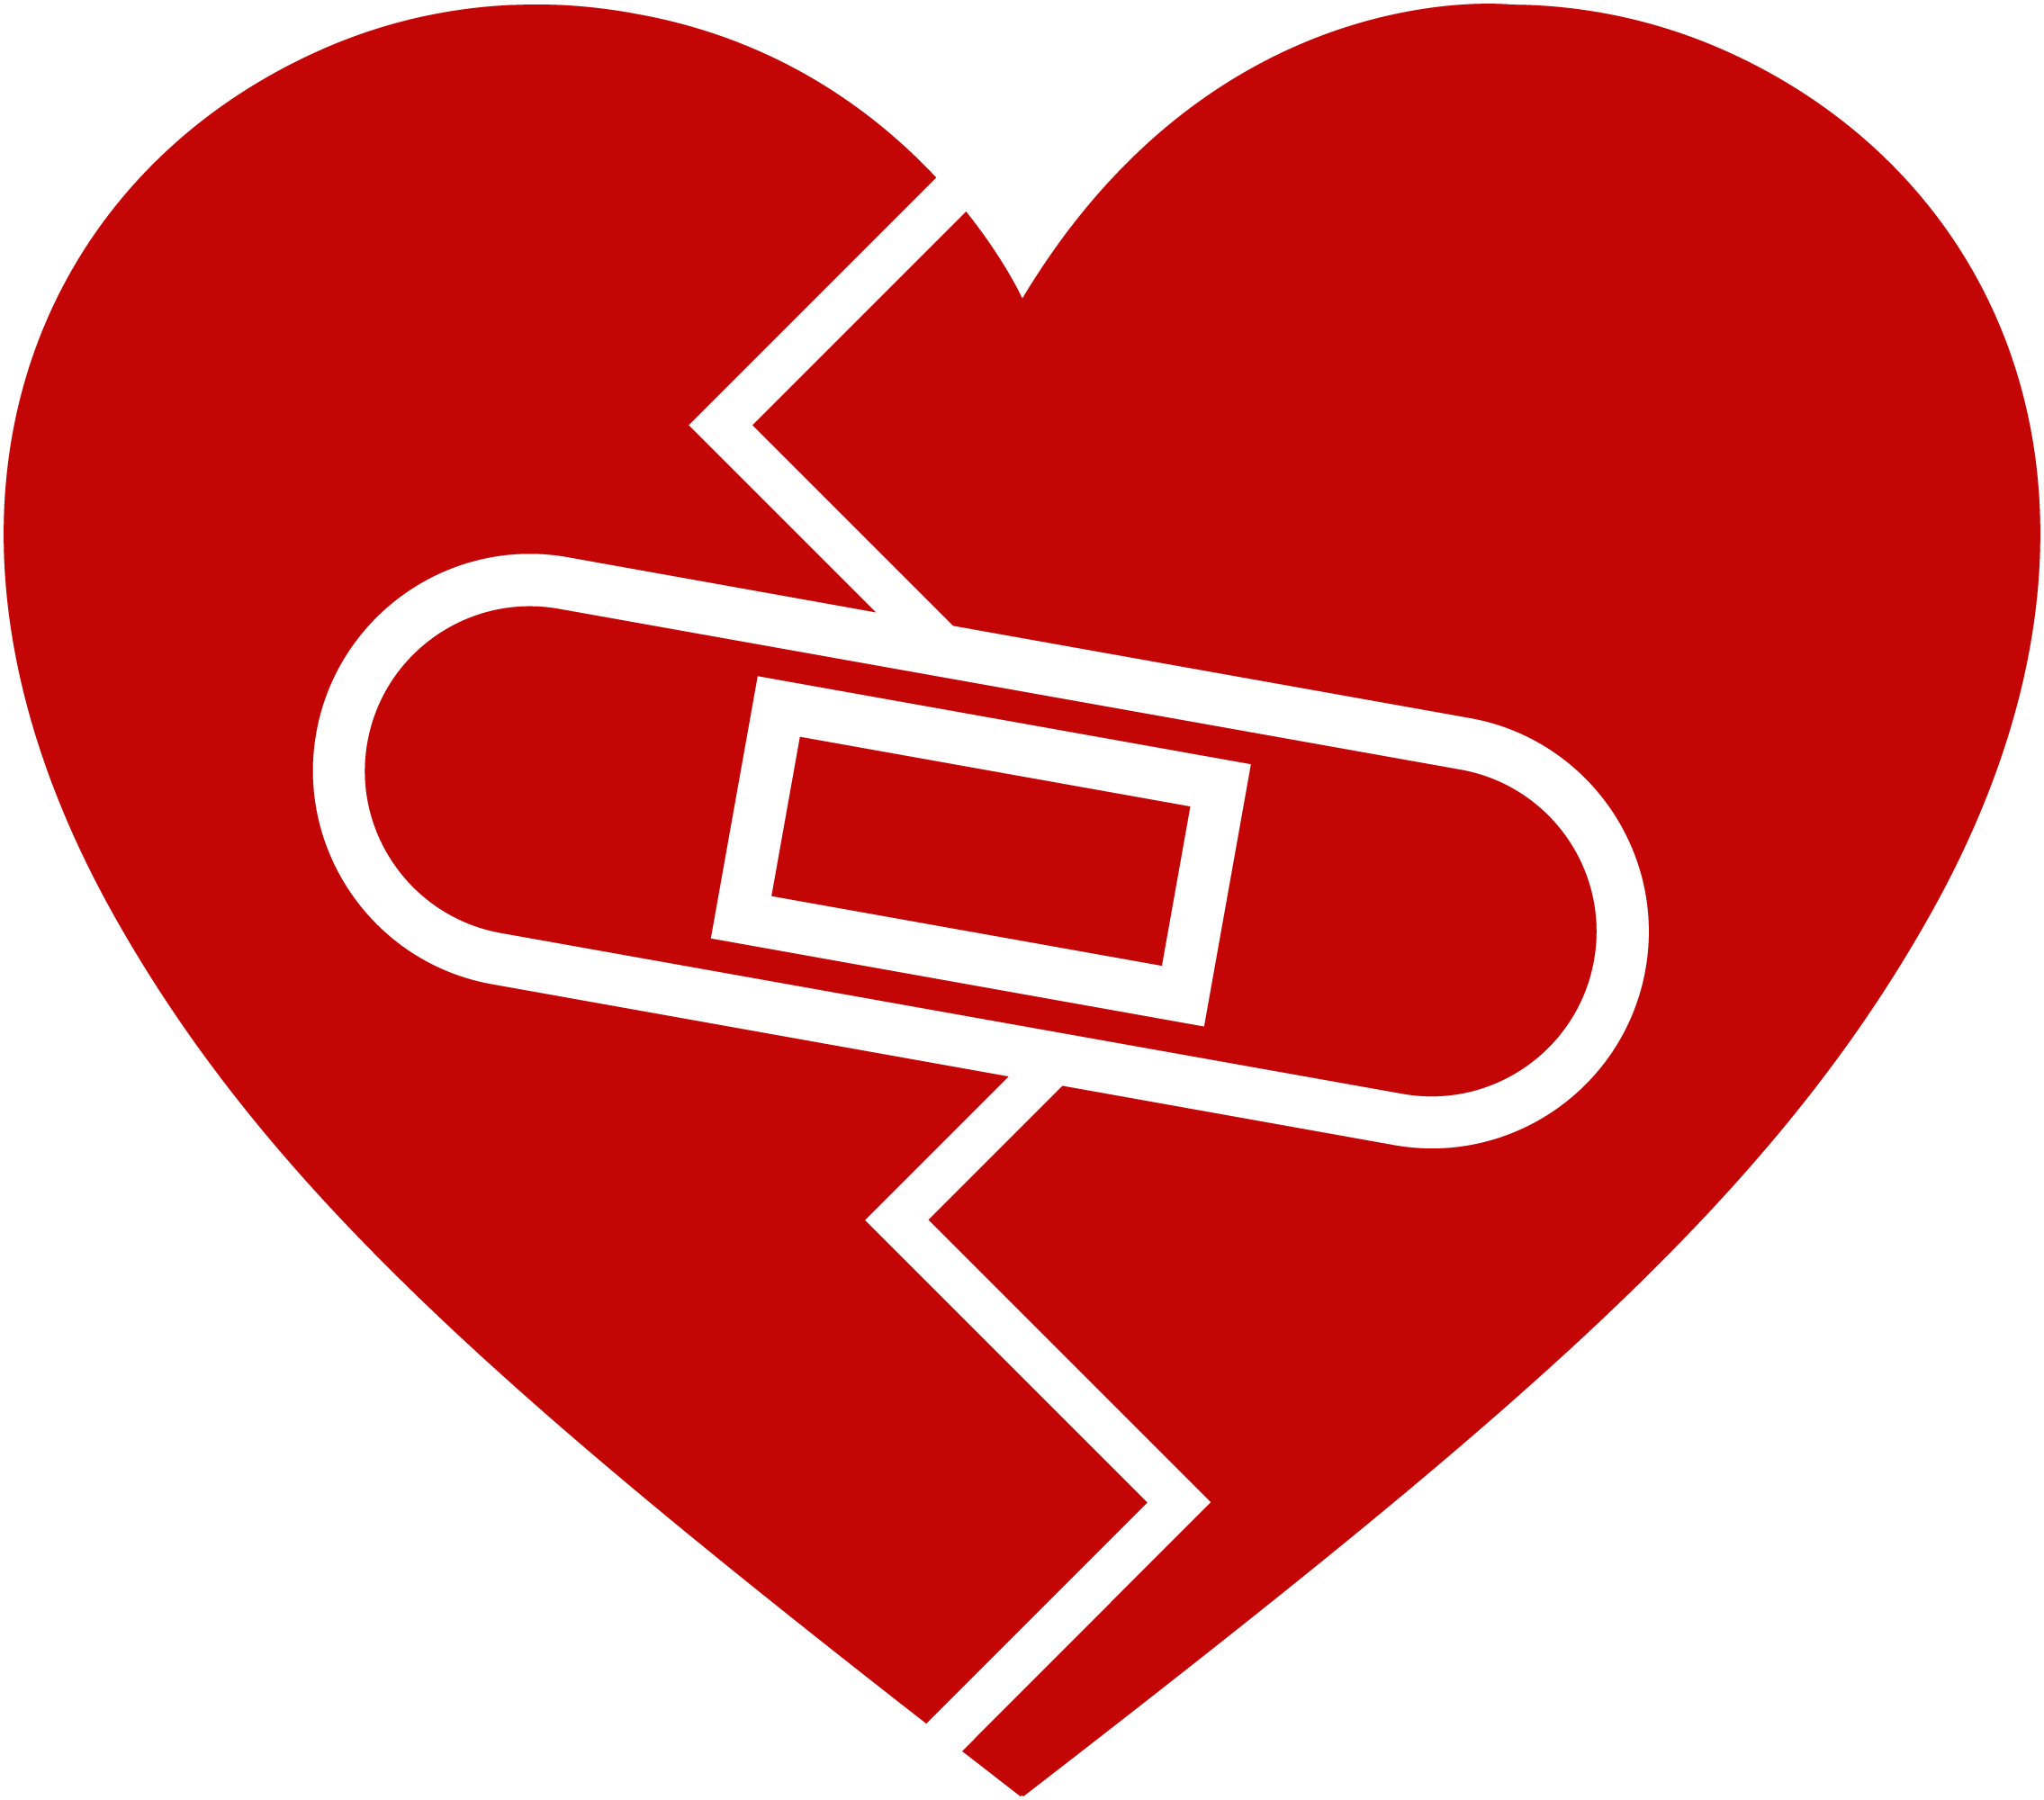 Broken Hearts: Strokes, Heart Attacks More Likely After Loss